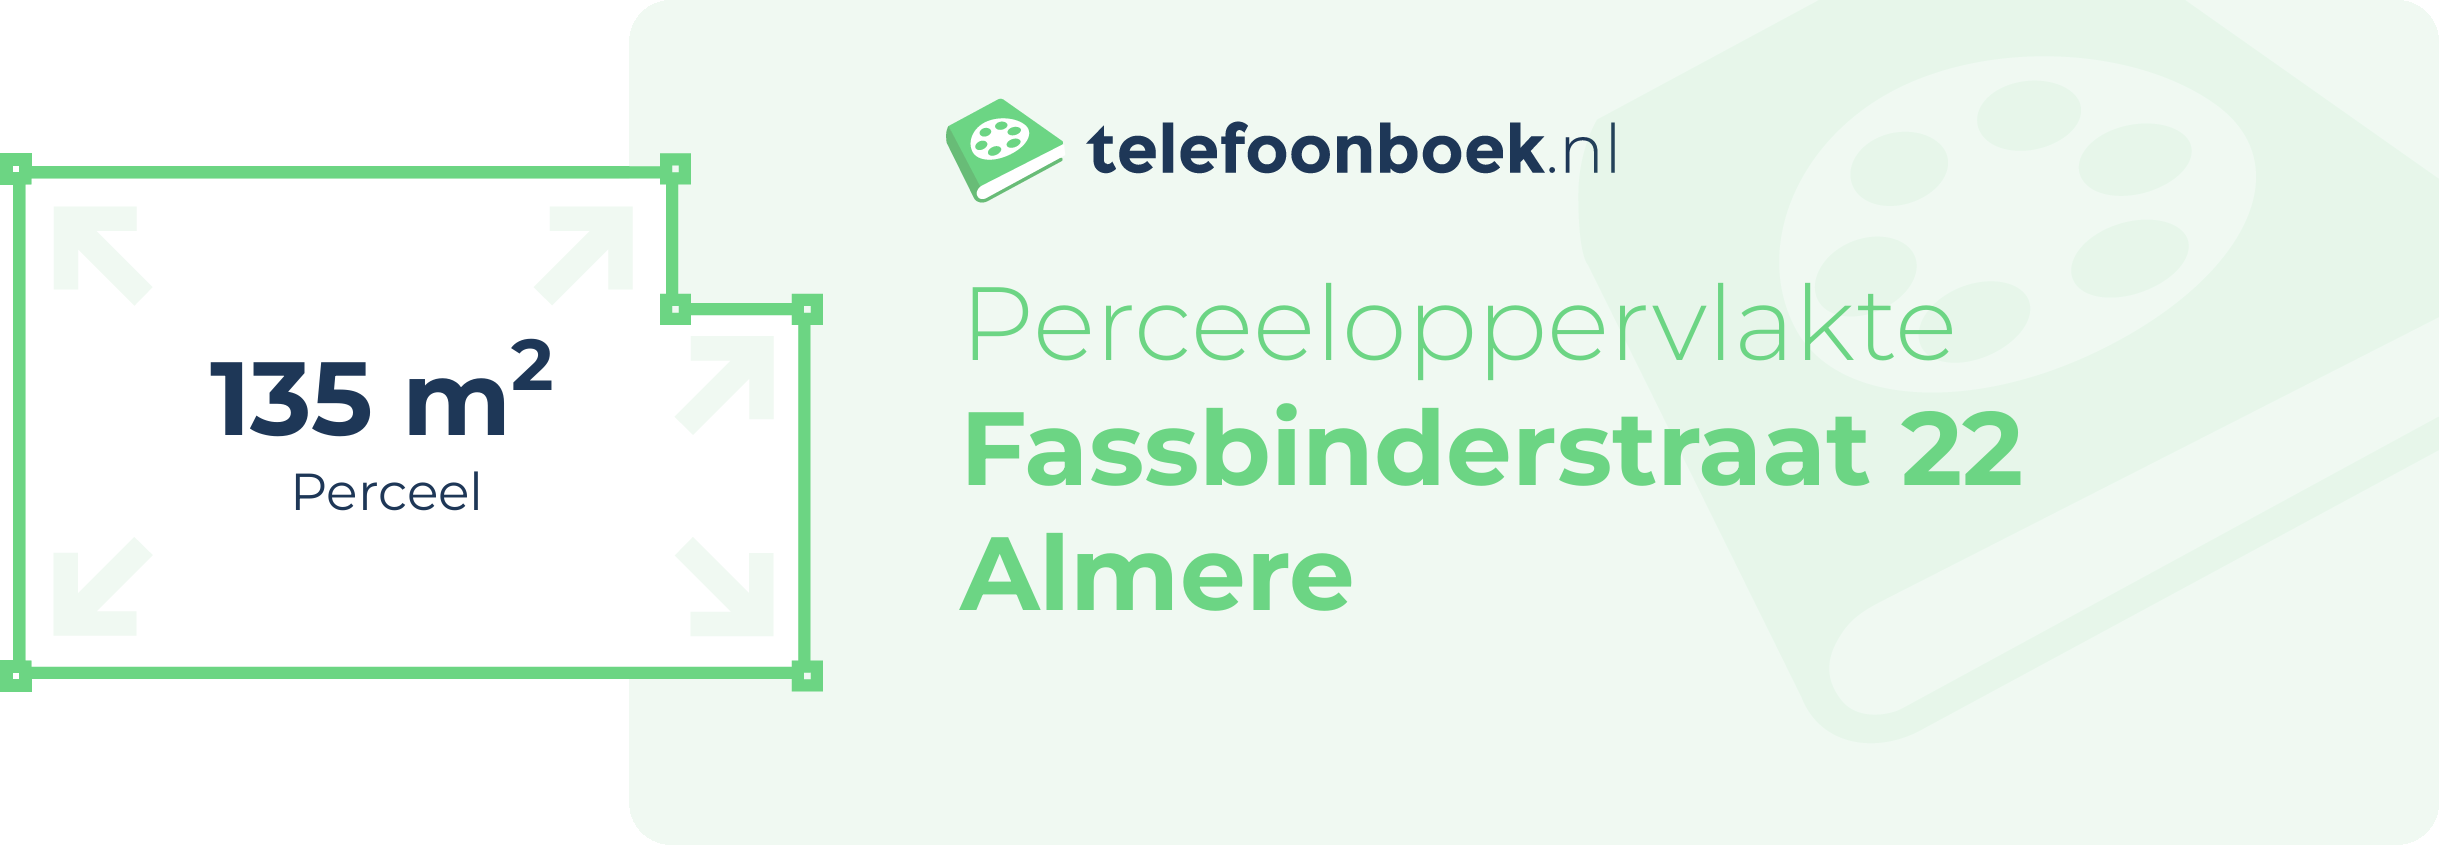 Perceeloppervlakte Fassbinderstraat 22 Almere